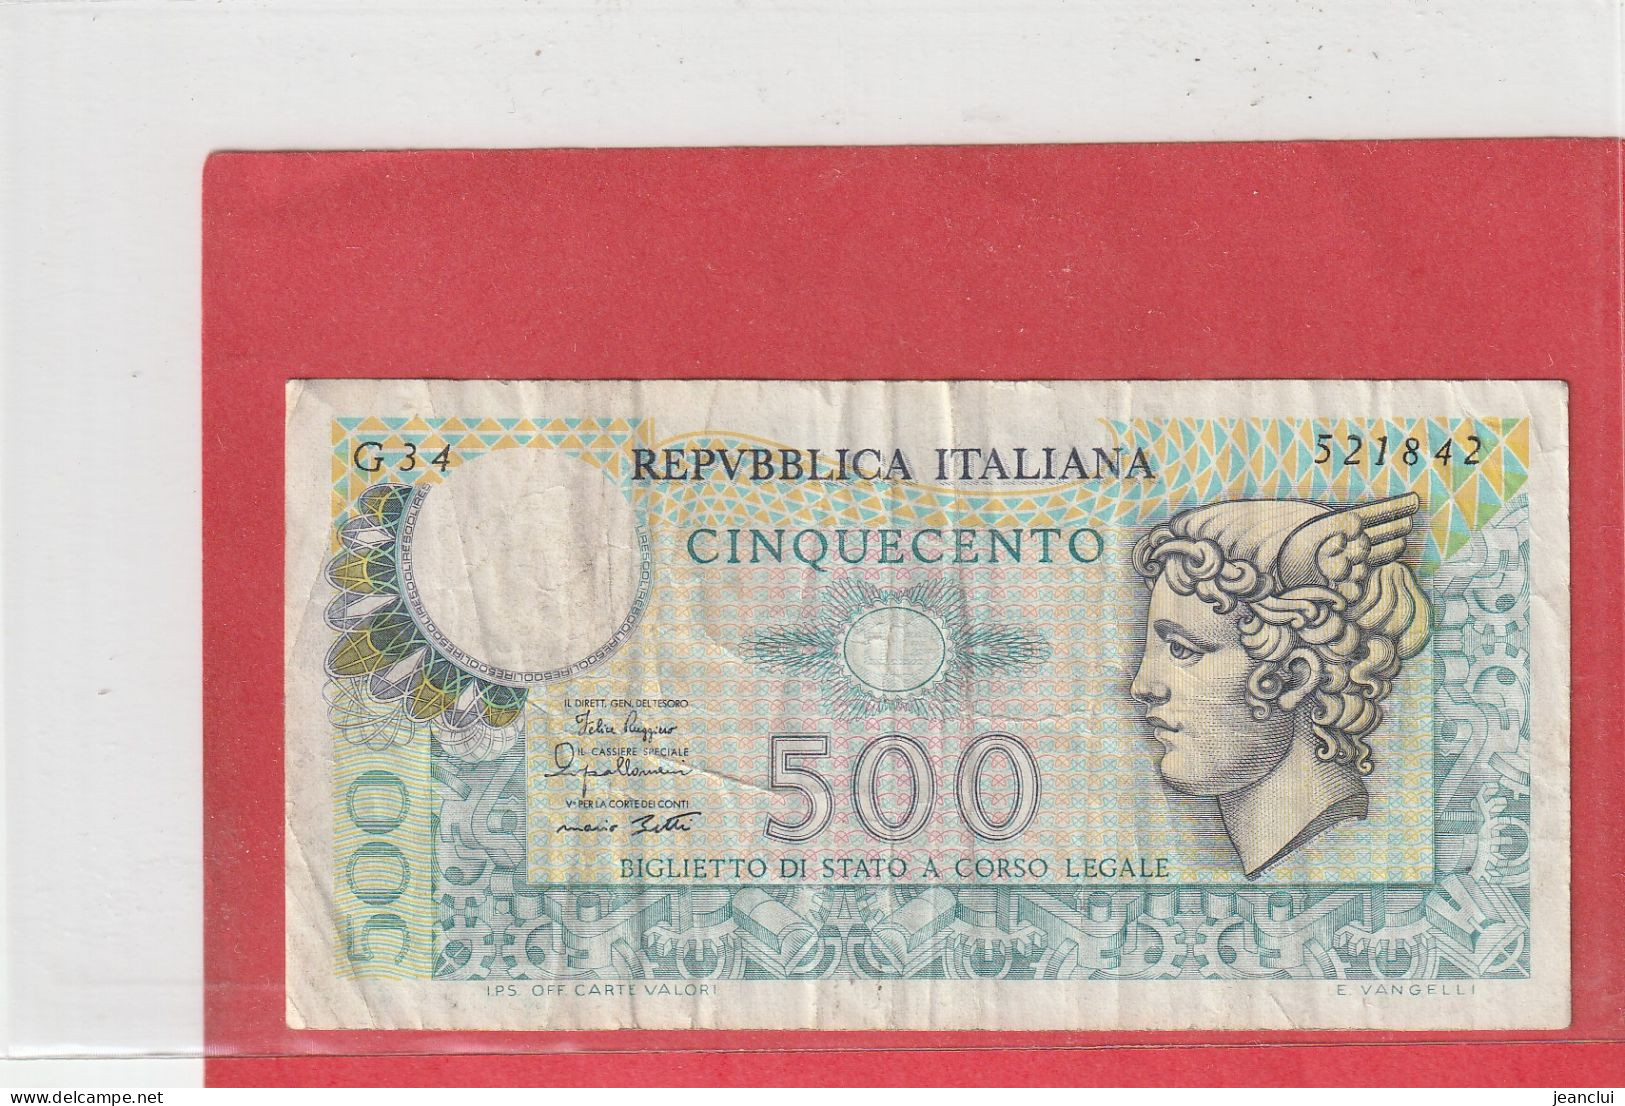 REPUBLICA ITALIANA  .  500 LIRE  .SERIE  G34  N° 521842  .  2 SCANNES  .  BILLET USITE - 500 Liras